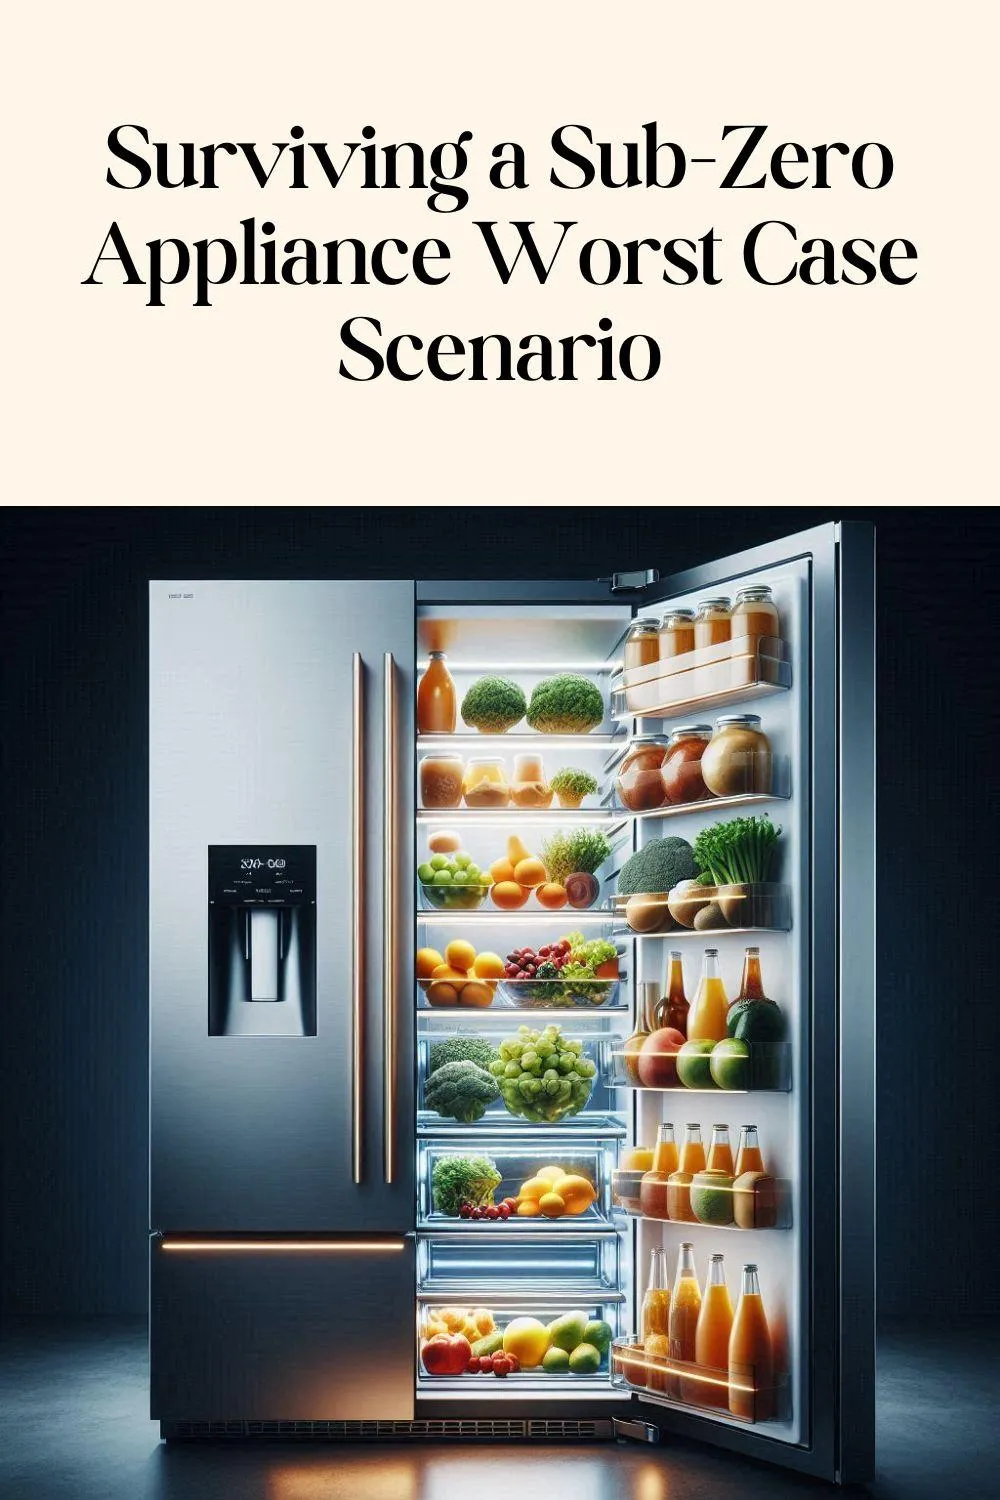 Surviving a Sub-Zero Appliance Worst Case Scenario